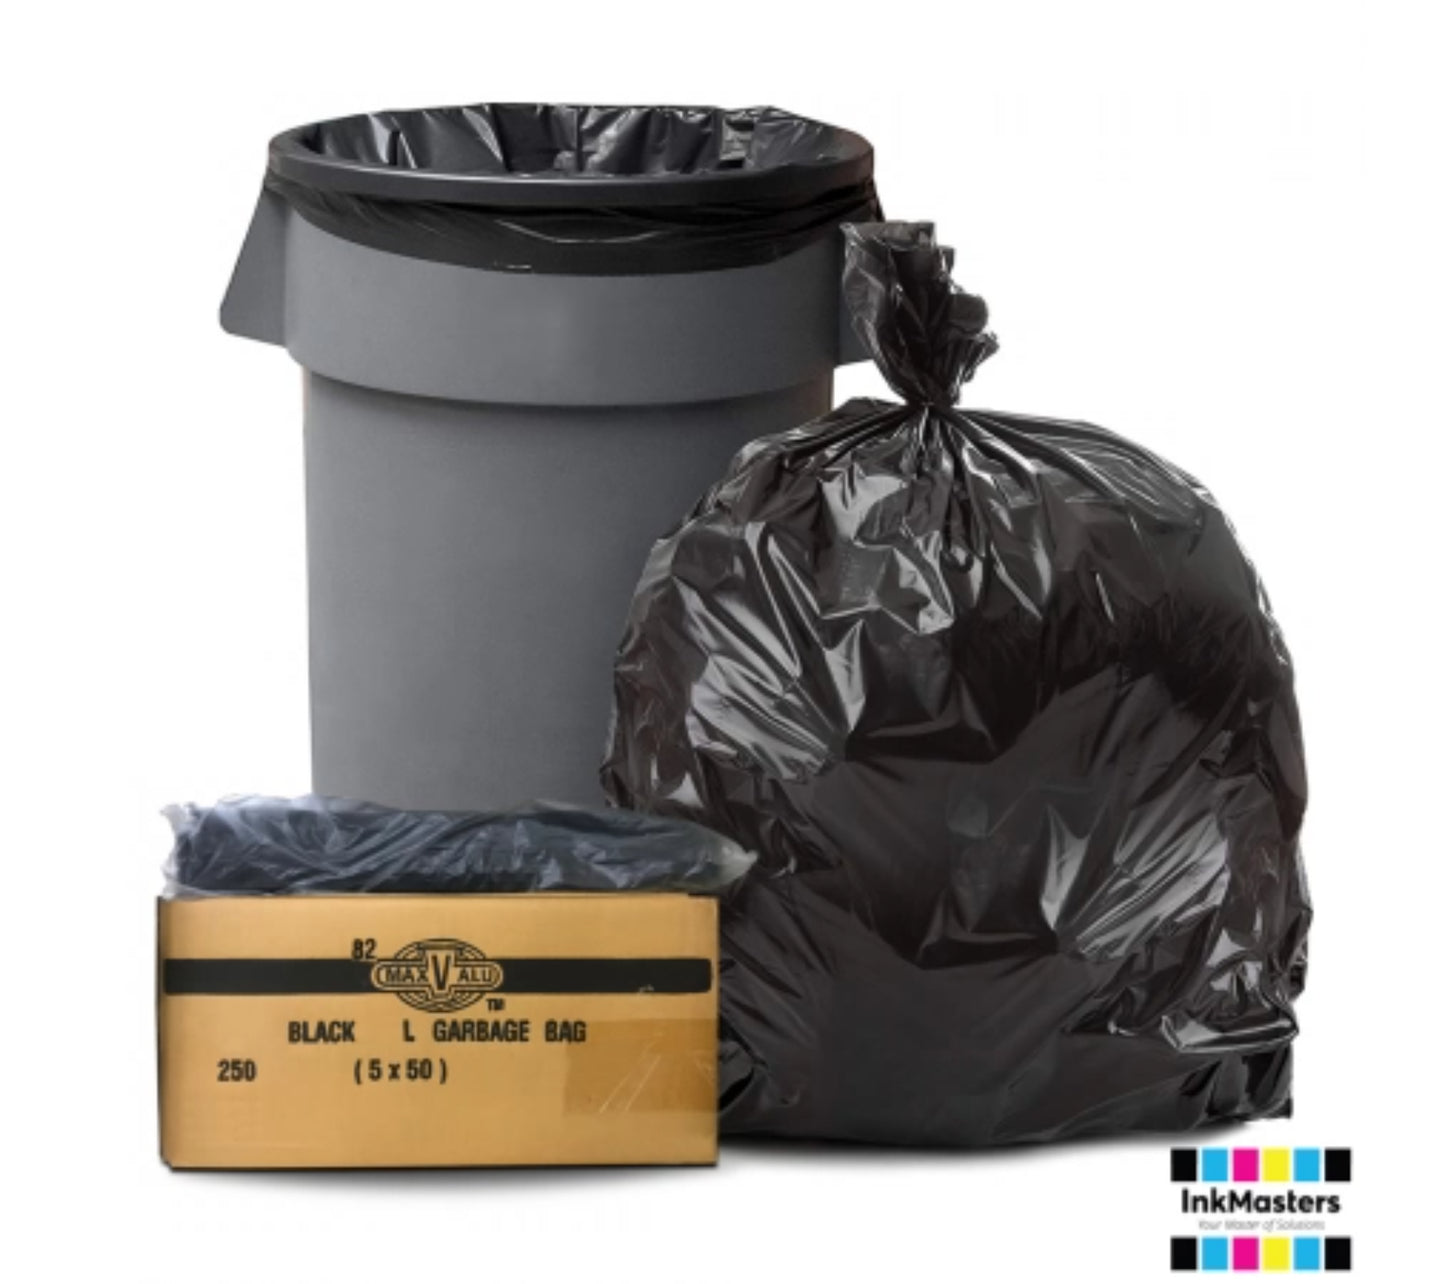 82L Black Heavy Duty Rubbish Bags / Bin Liners, 21um, 5x50 (250 Garbage Bags)